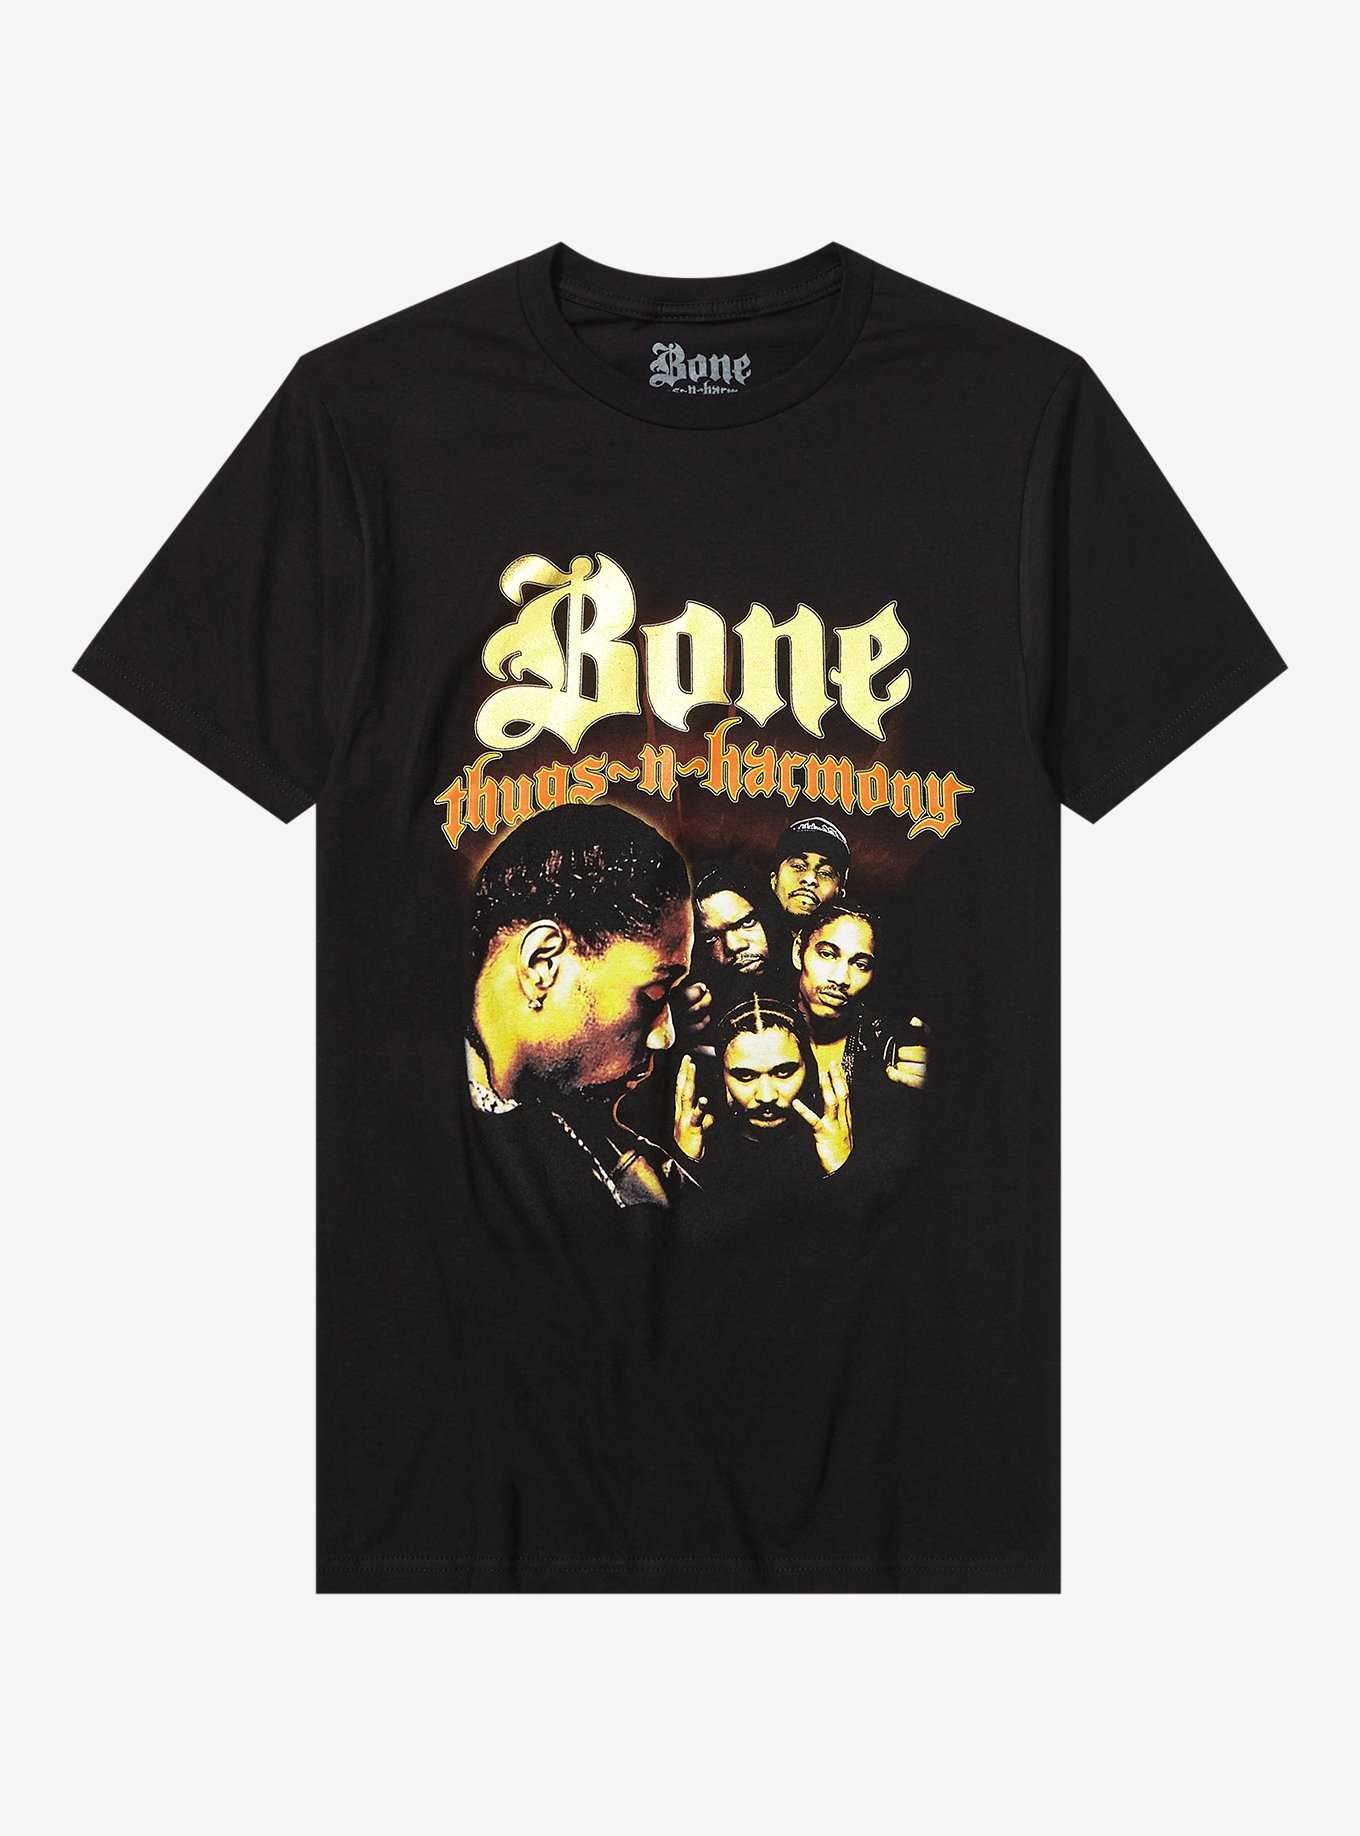 Bone Thugs-N-Harmony Group Boyfriend Fit Girls T-Shirt, , hi-res